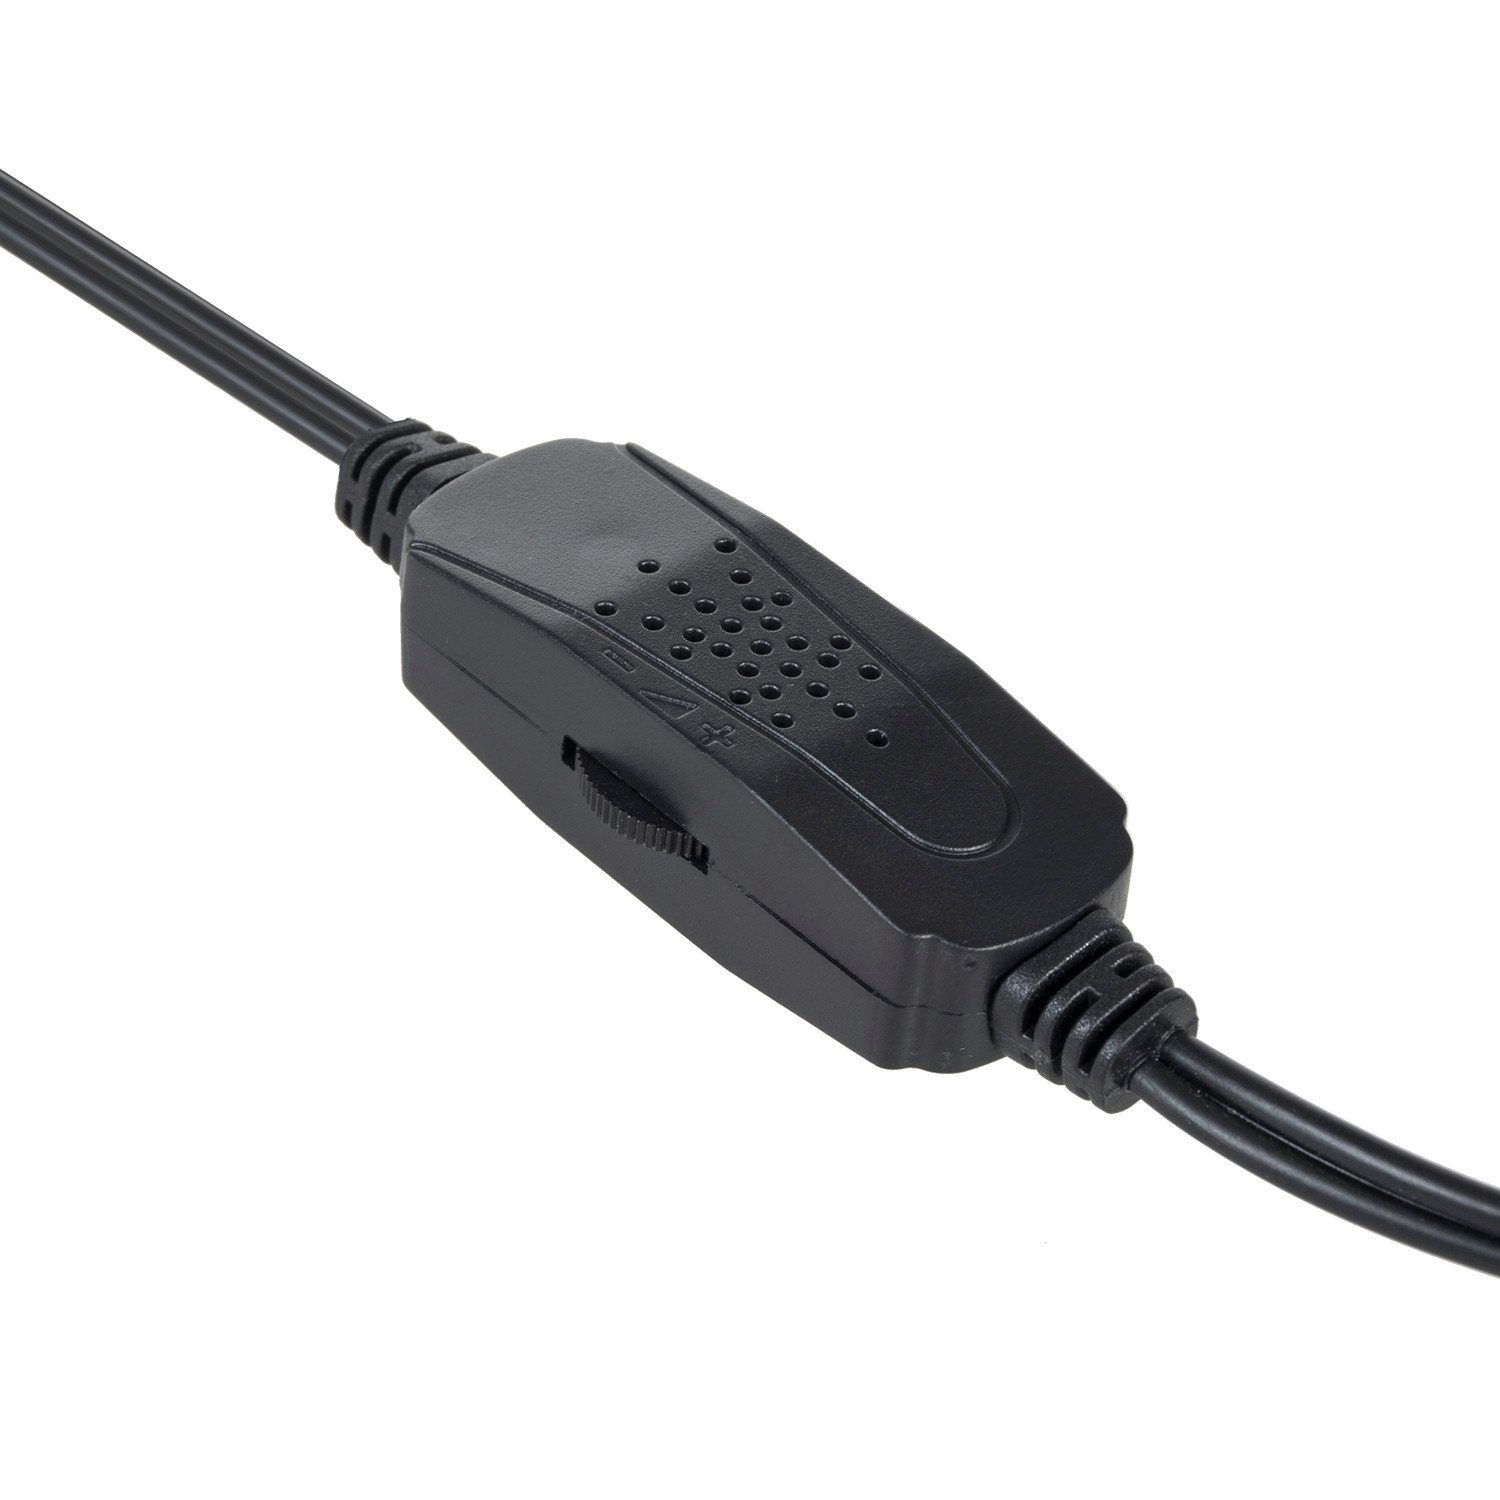 Audiocore AC860 Stereo, 2.0 PC-Lautsprecher AUX-Kabel, (USB, LED-Beleuchtung) Lautstärkeregelung, W, 8 Blaue